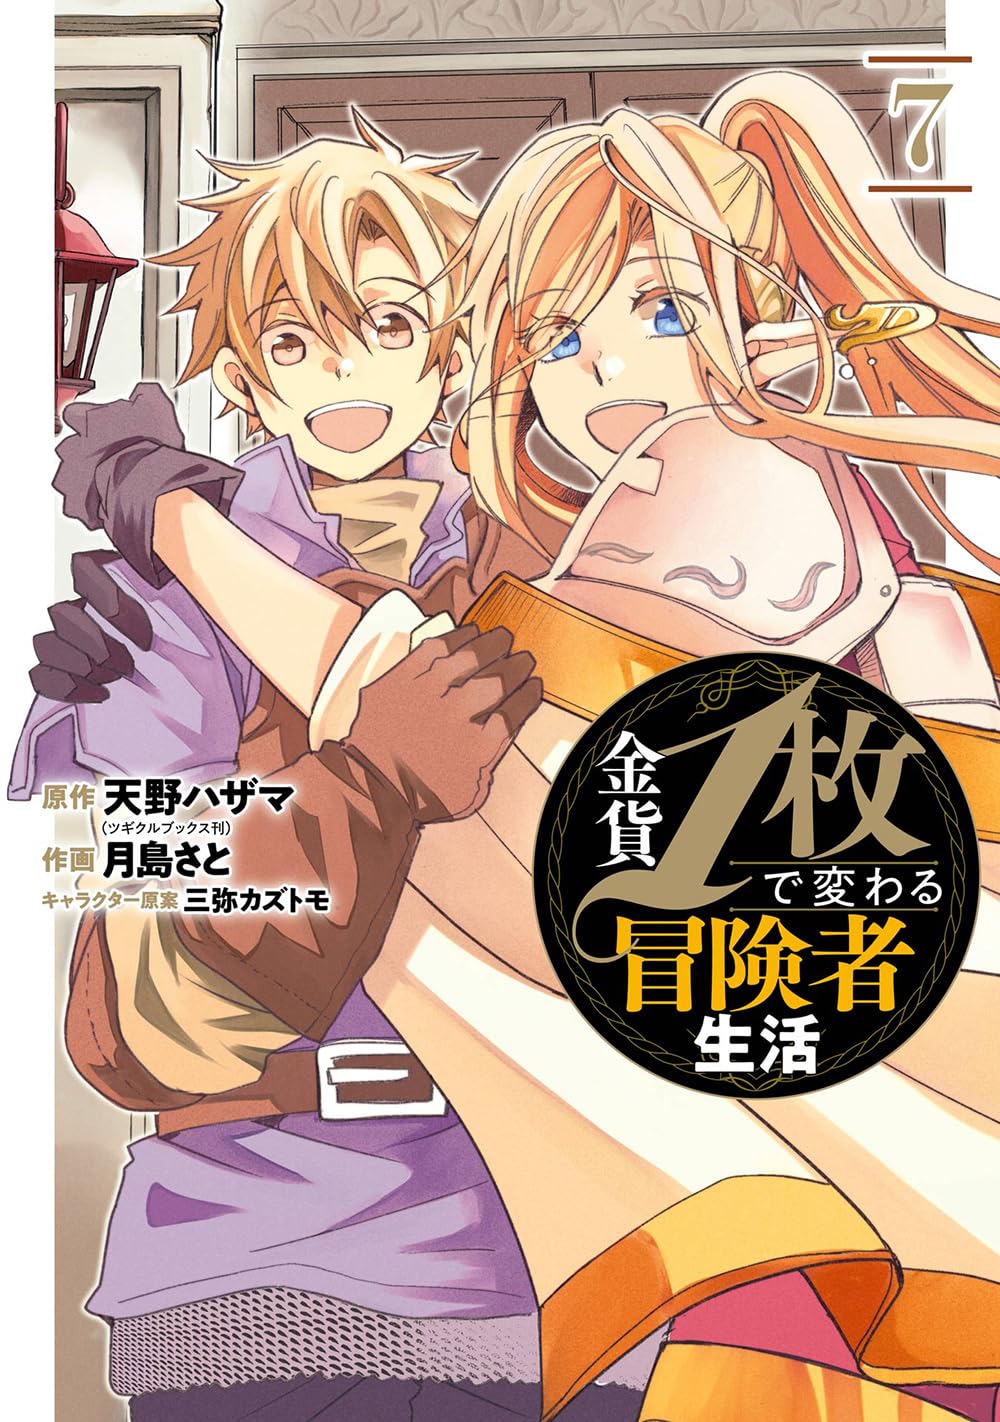 Light Novel Like Kinka 1-mai de Kawaru Boukensha Seikatsu